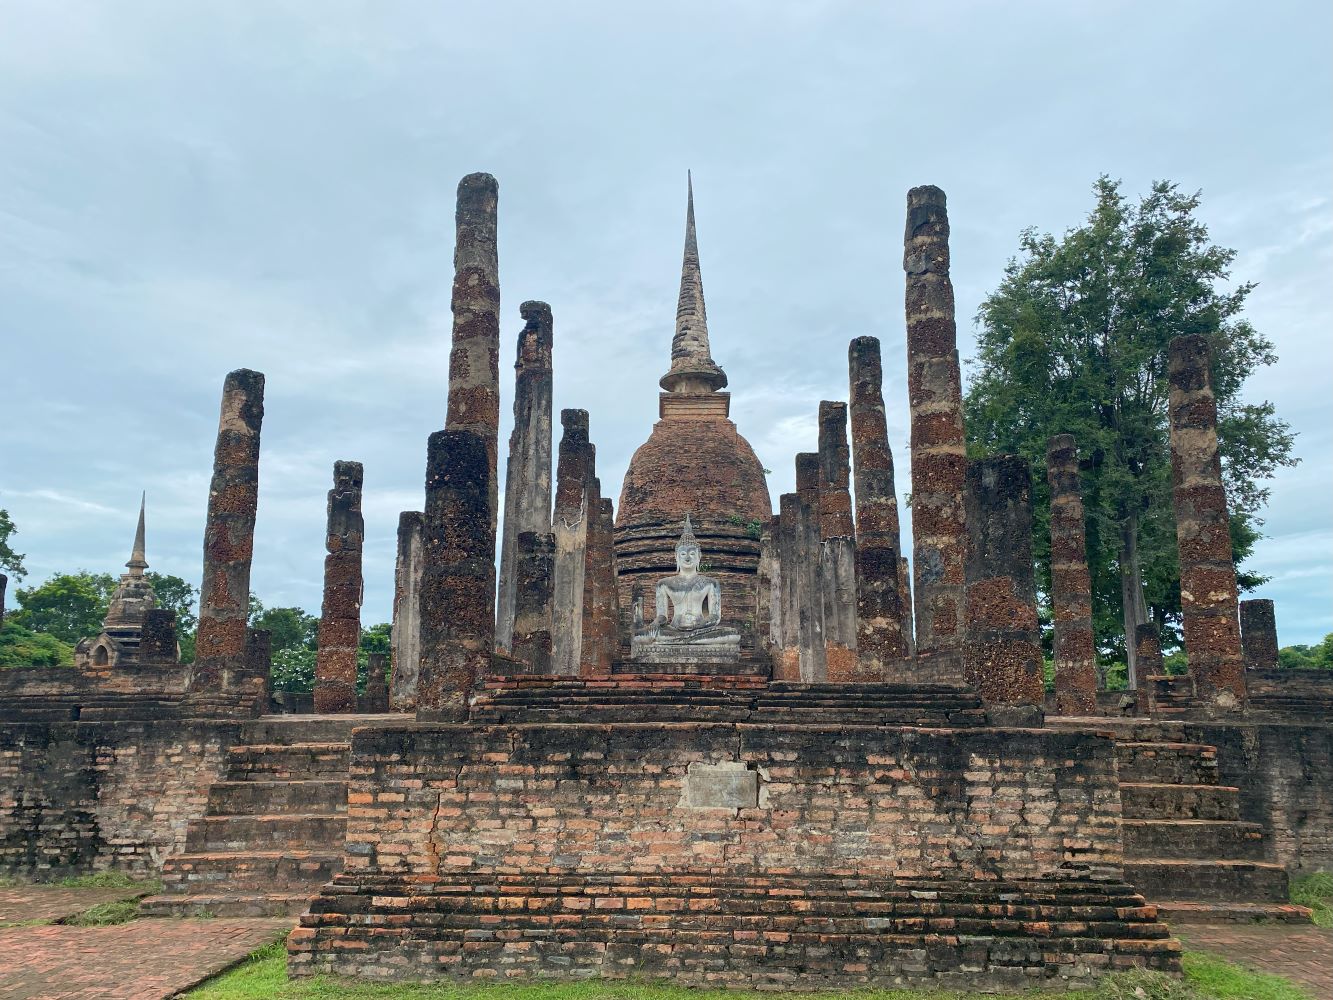 Exploring Sukhothai’s ruins